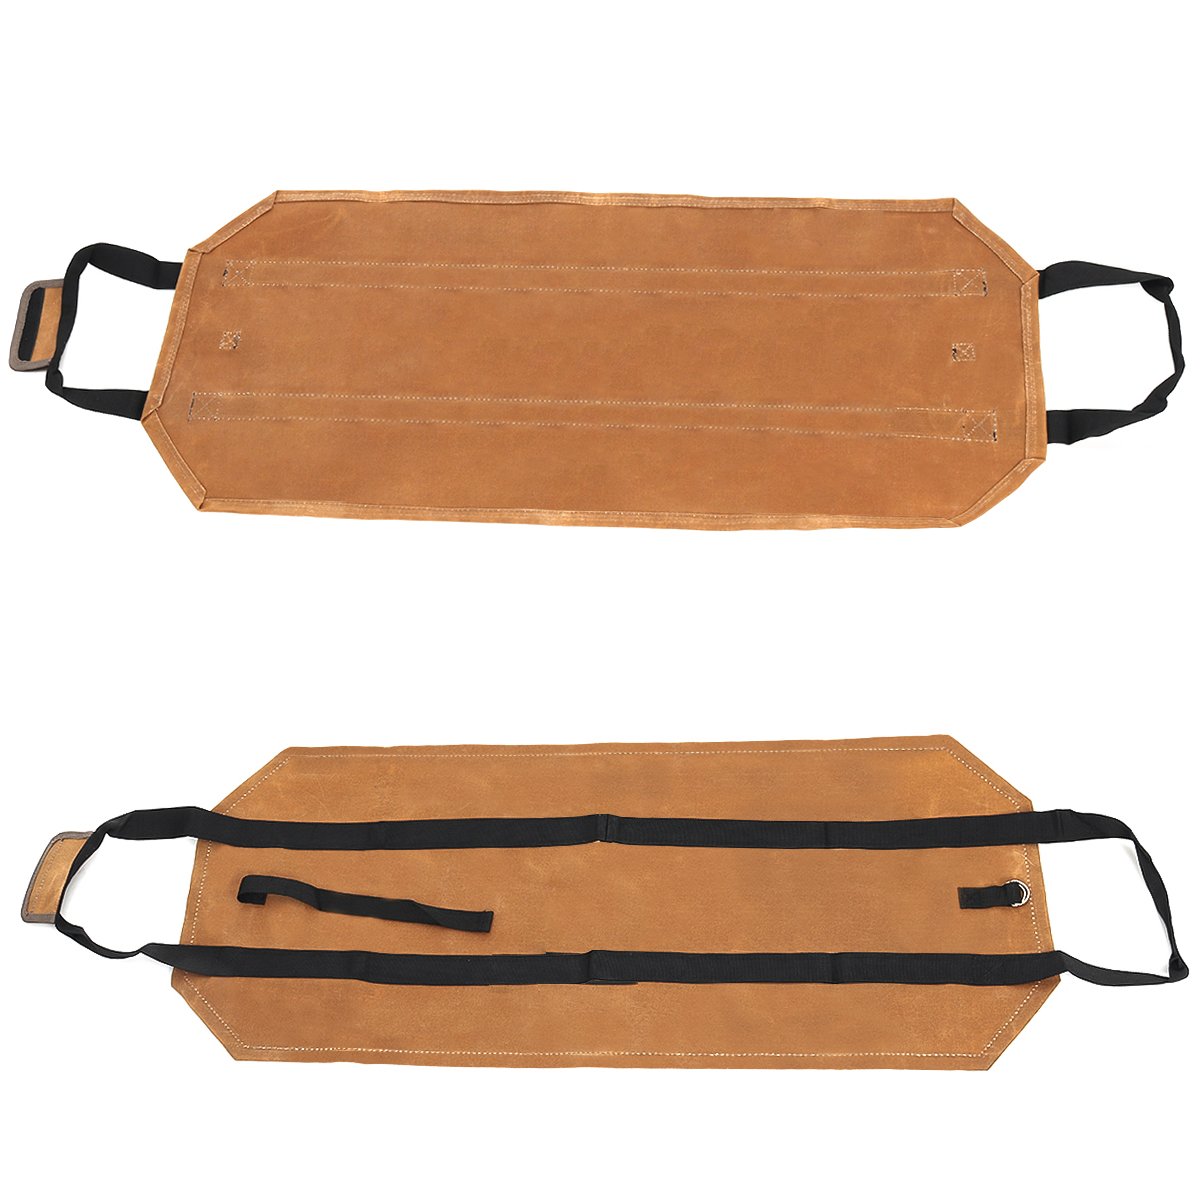 Firewood-Carrier-Holder-Canvas-Tote-Bag-Wood-Bag-Wood-Storage-Organizer-Waterproof-Portable-Outdoor--1889169-5